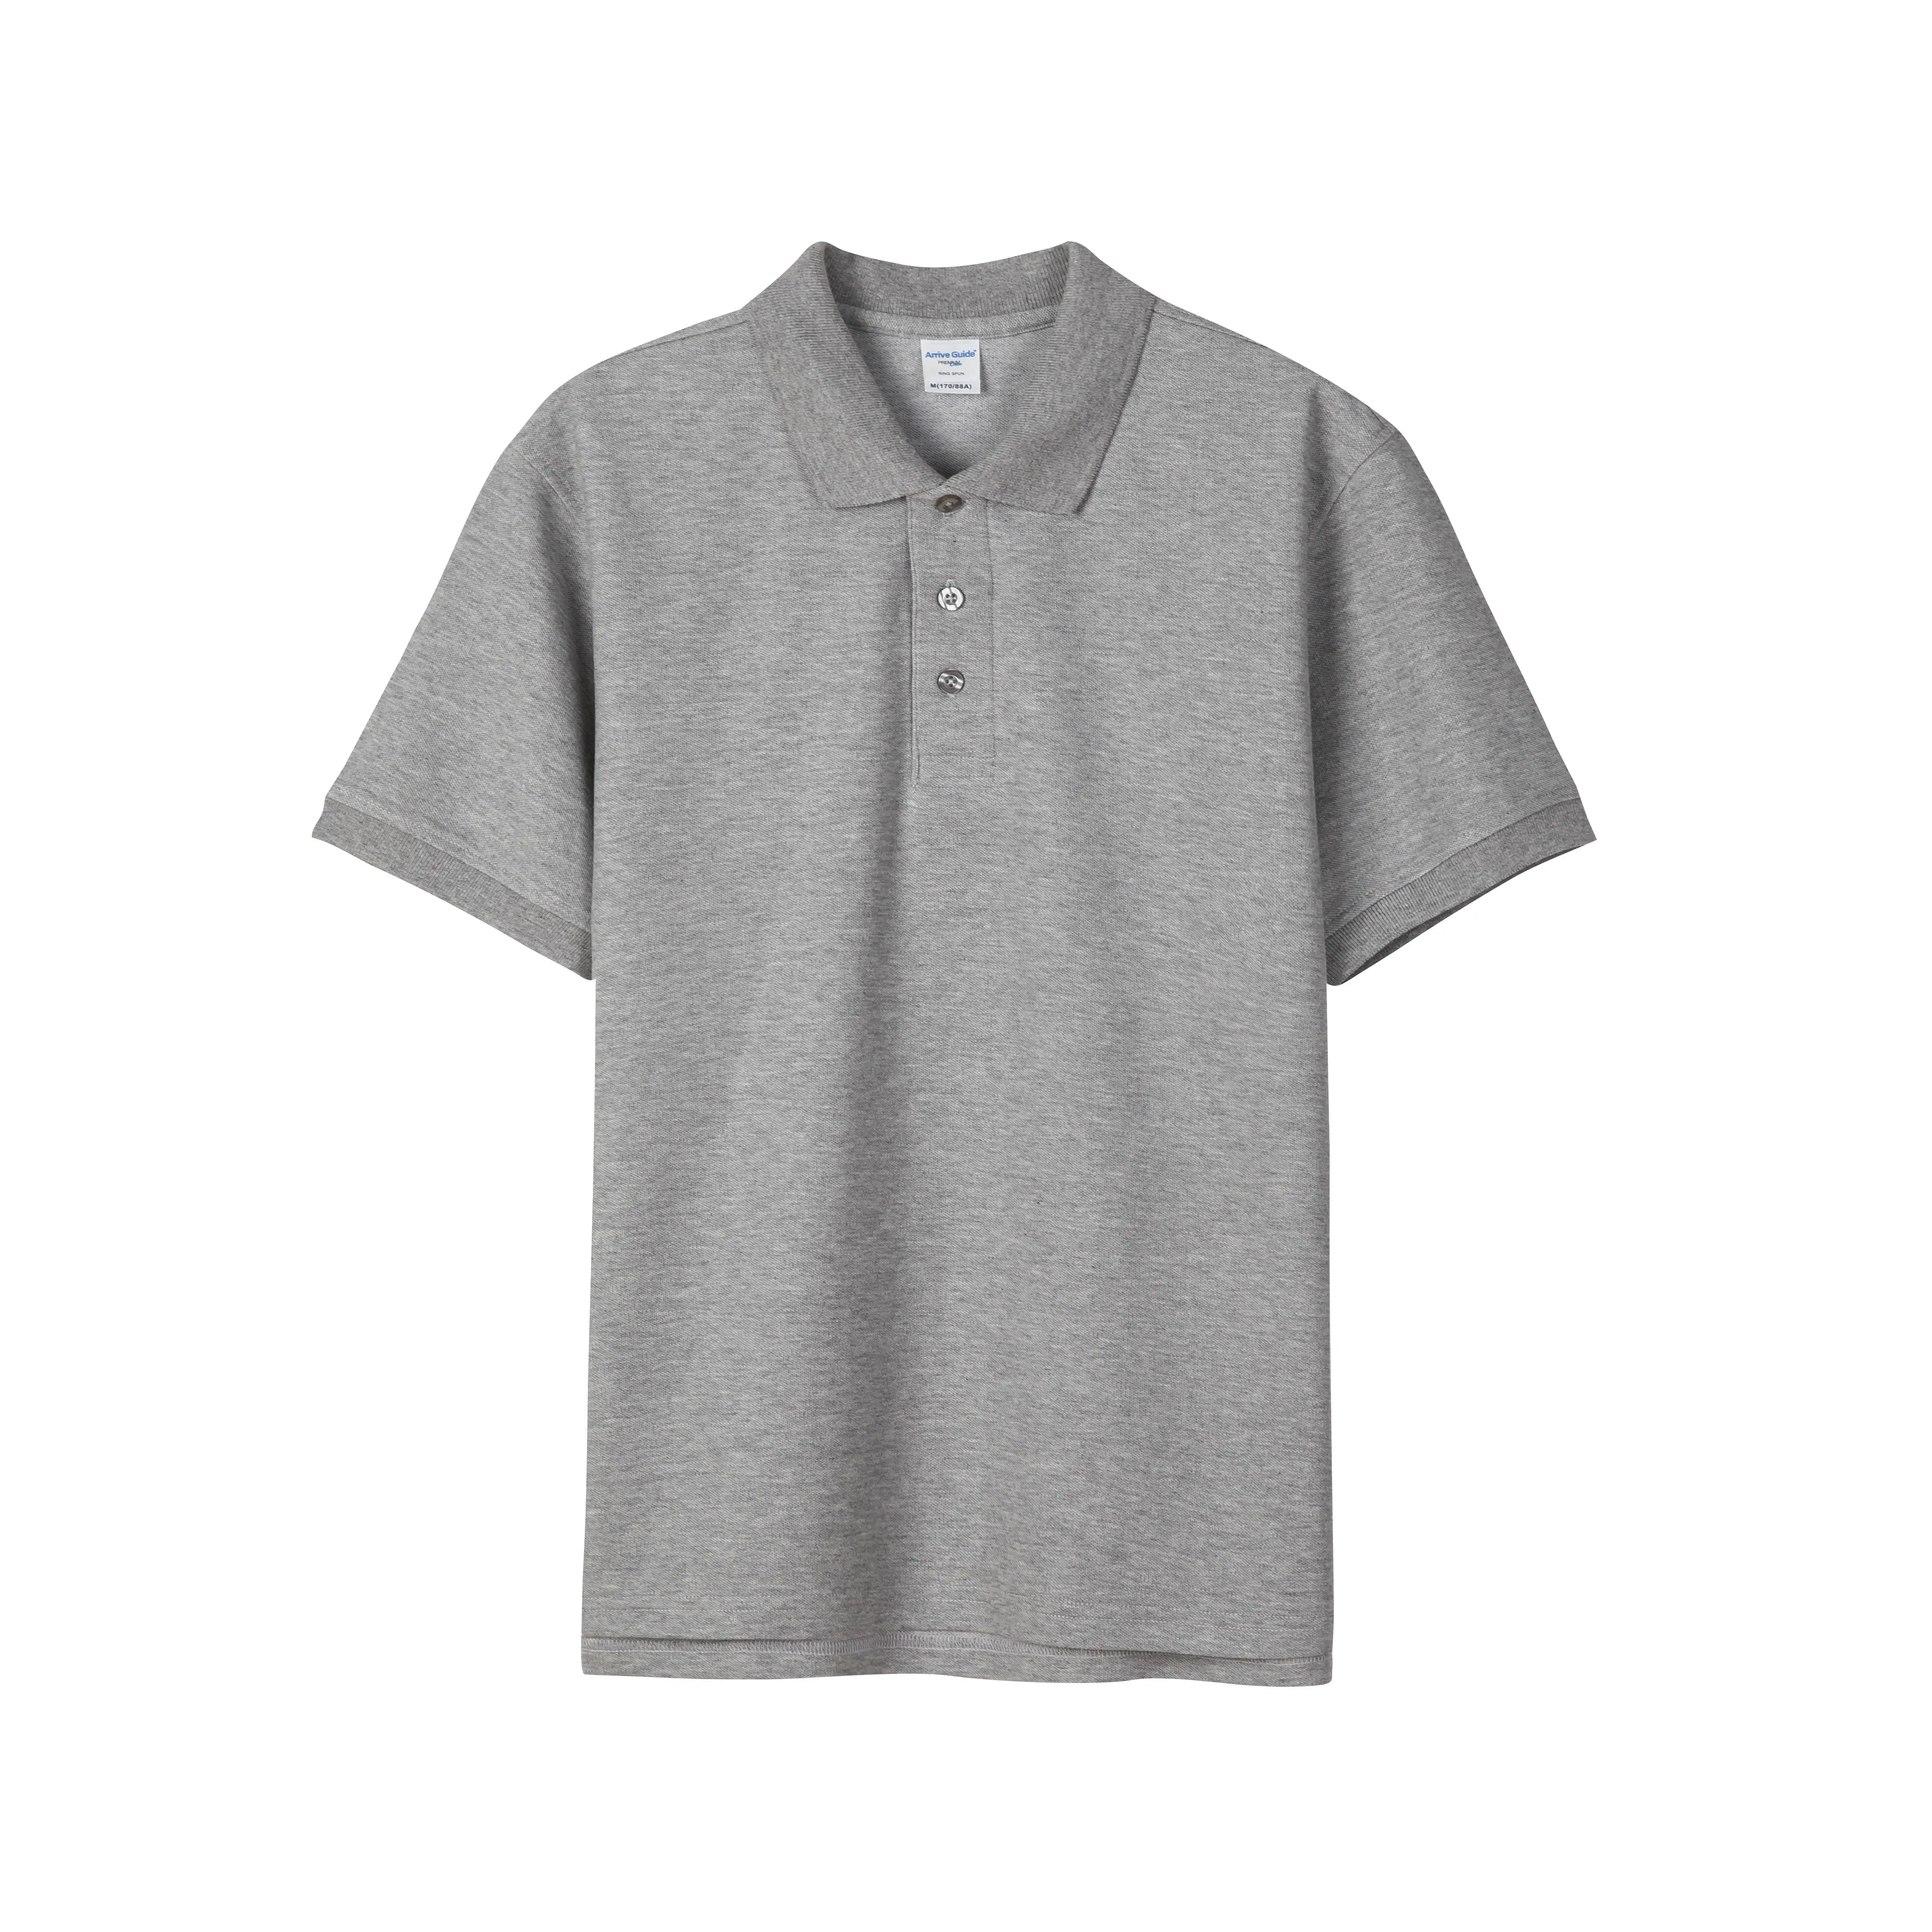 Asia 100% cotton 230 gsm 40s High quality new design best price polo shirt tennis shirt